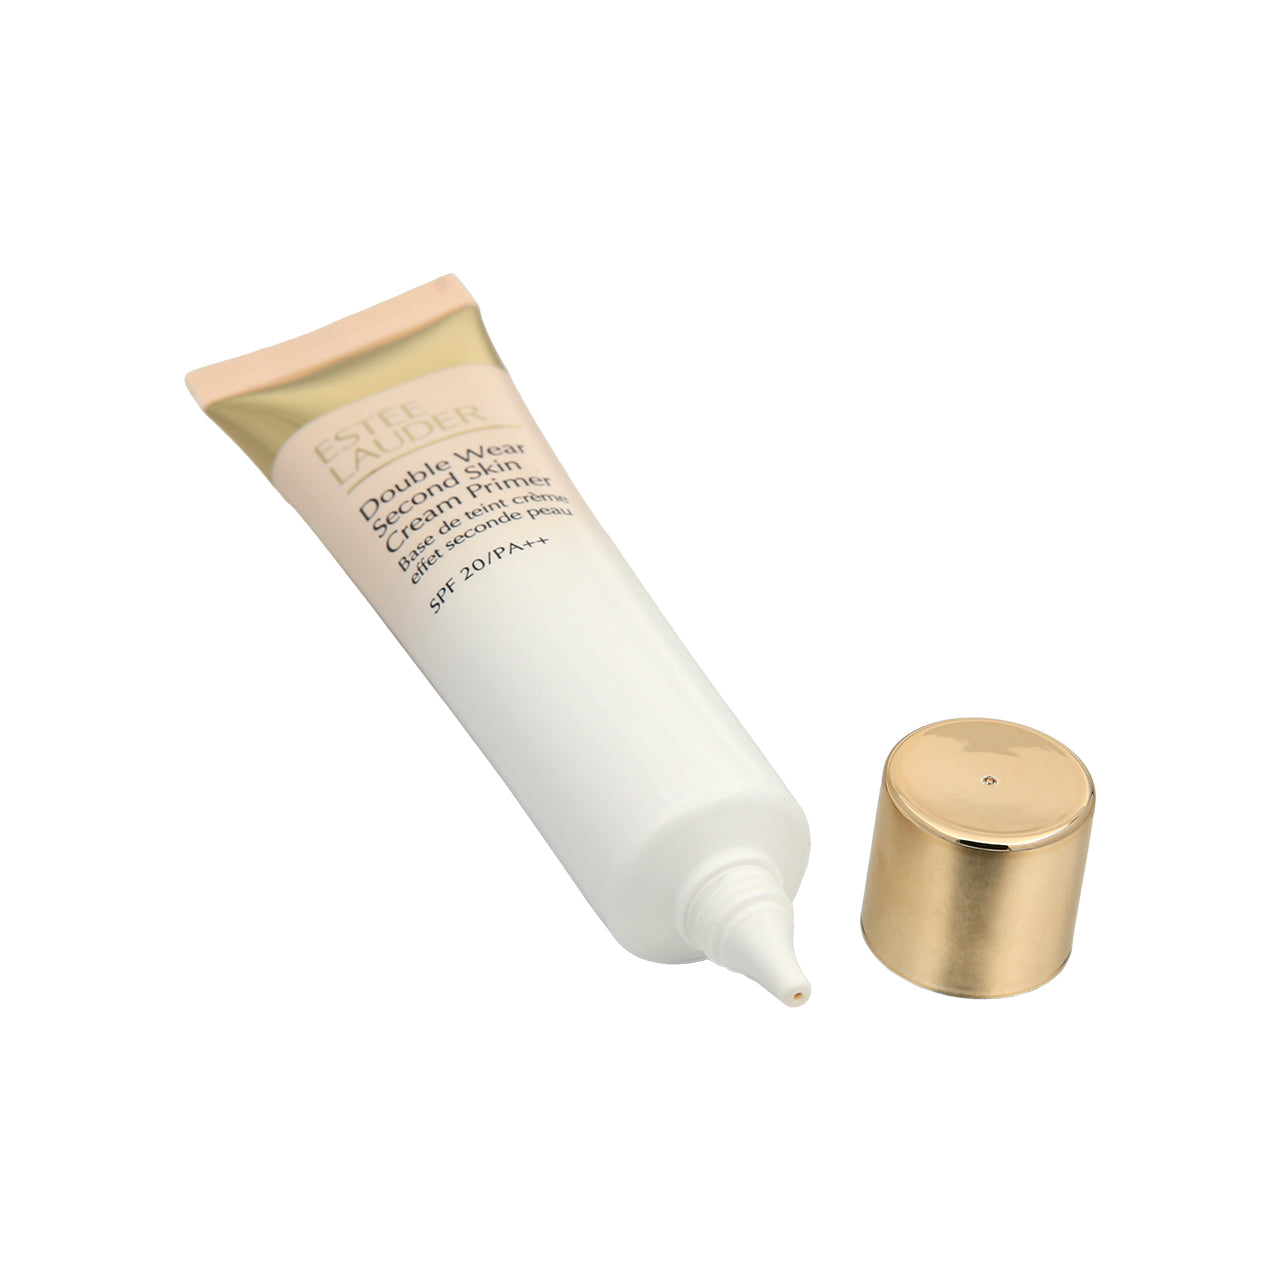 Estee Lauder Double Wear Second Skin Cream Primer SPF 20/PA++ 40ml | Sasa Global eShop